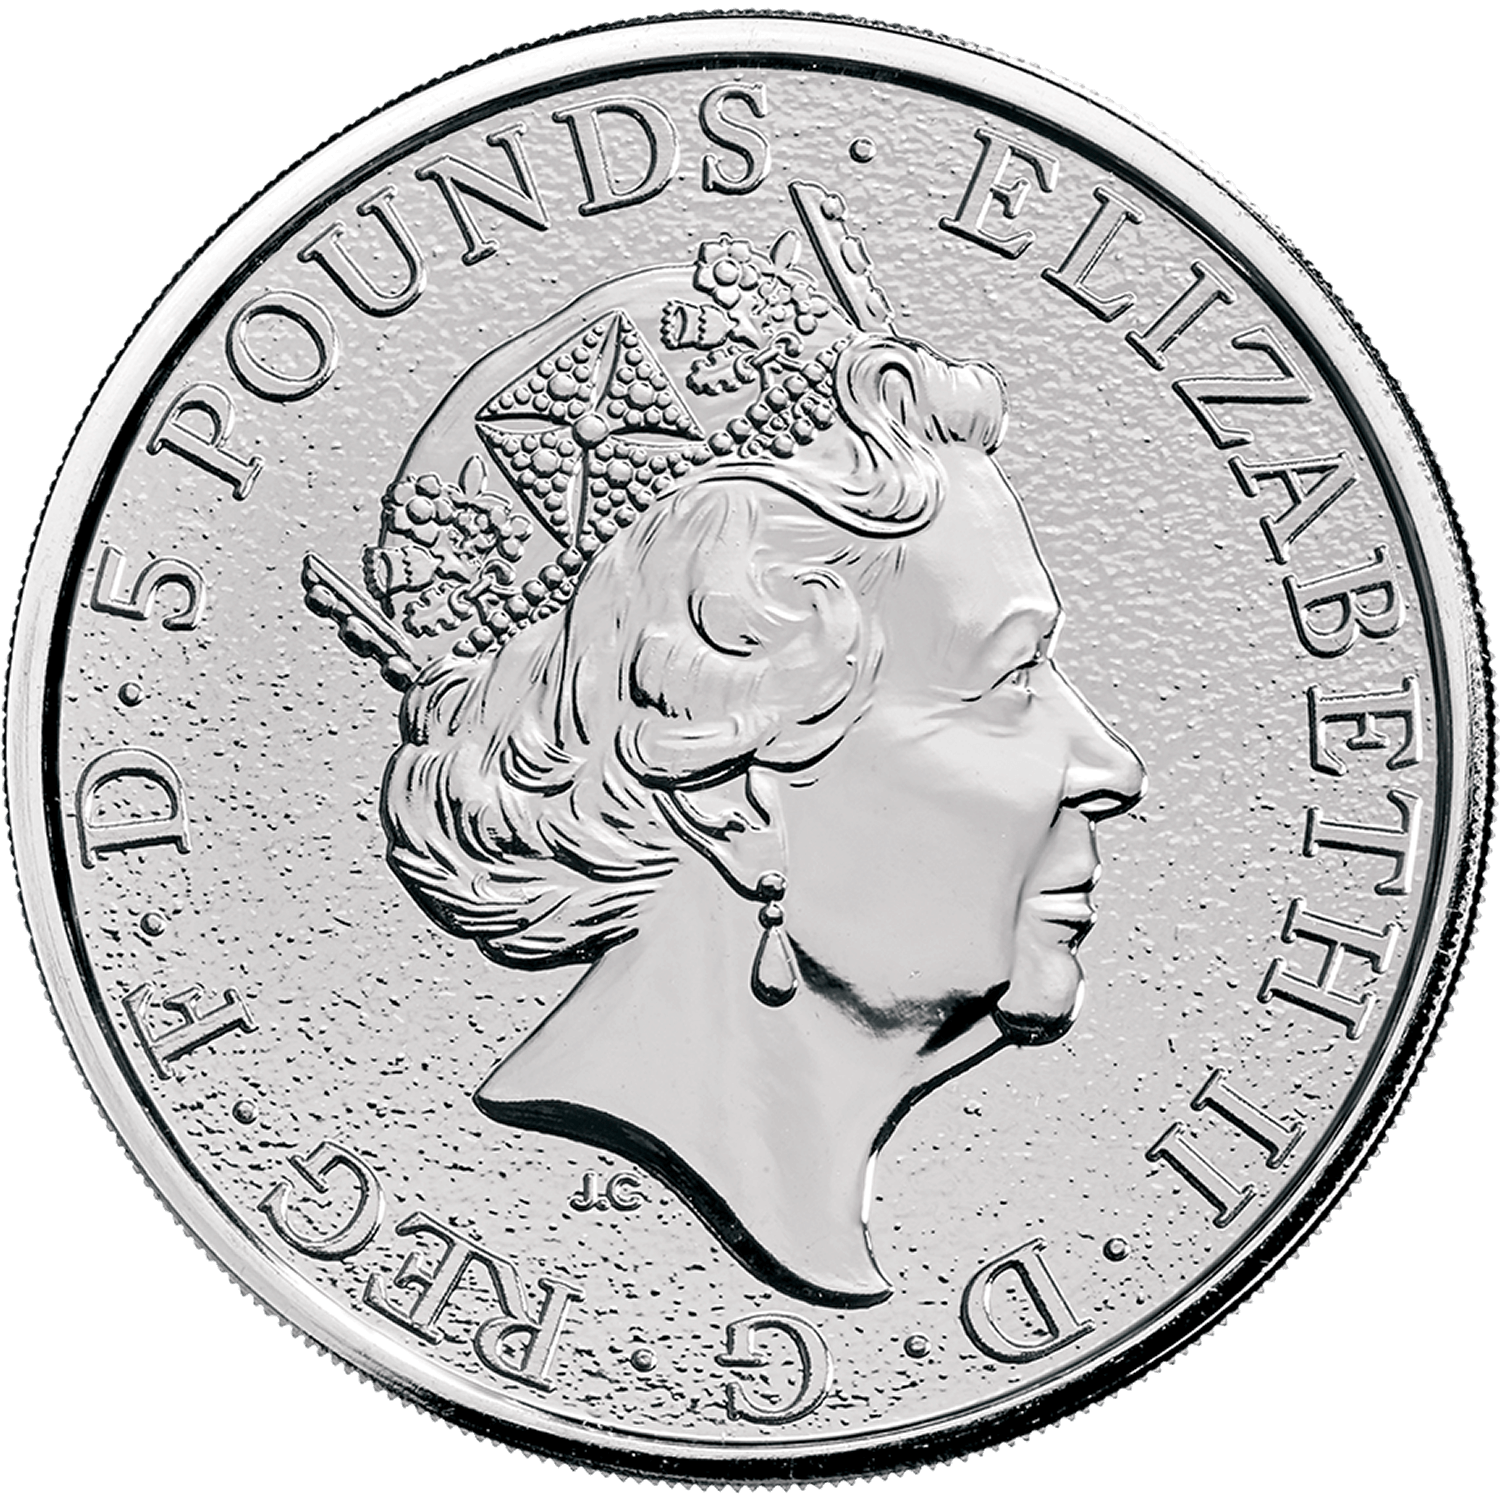 Queen's Beasts 2017 Dragon - 2 oz Silver Bullion Coin | Royal Mint